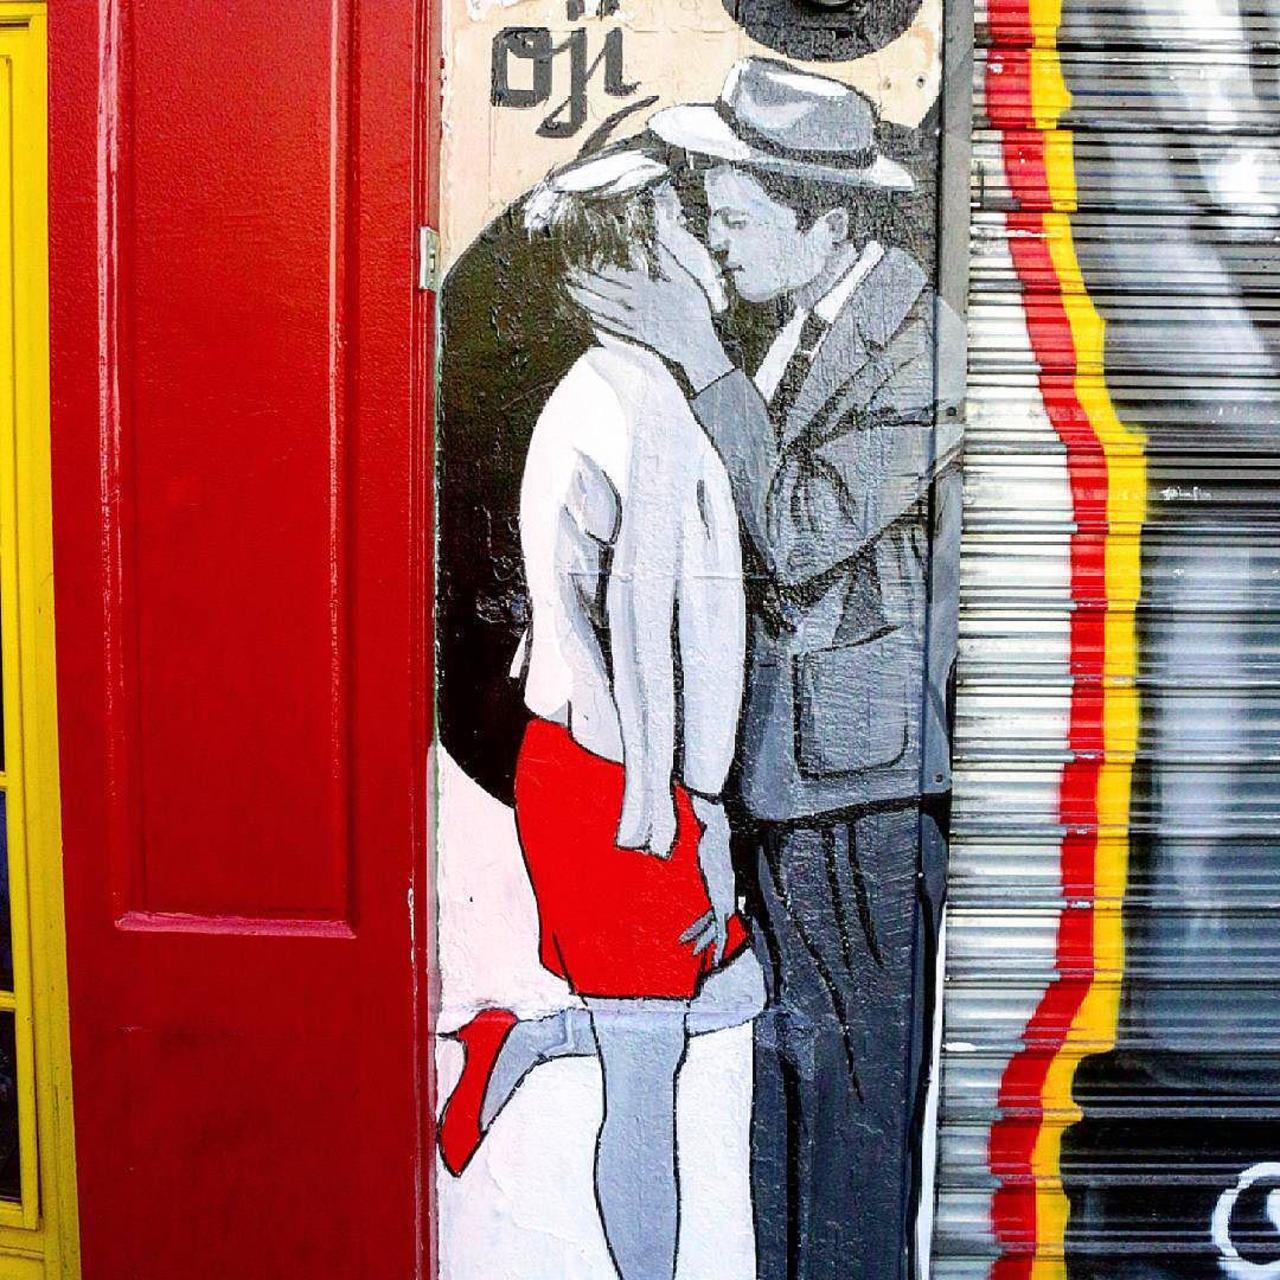 #Paris #graffiti photo by @jpoesse http://ift.tt/1hH5hJx #StreetArt http://t.co/lxUxki70tY